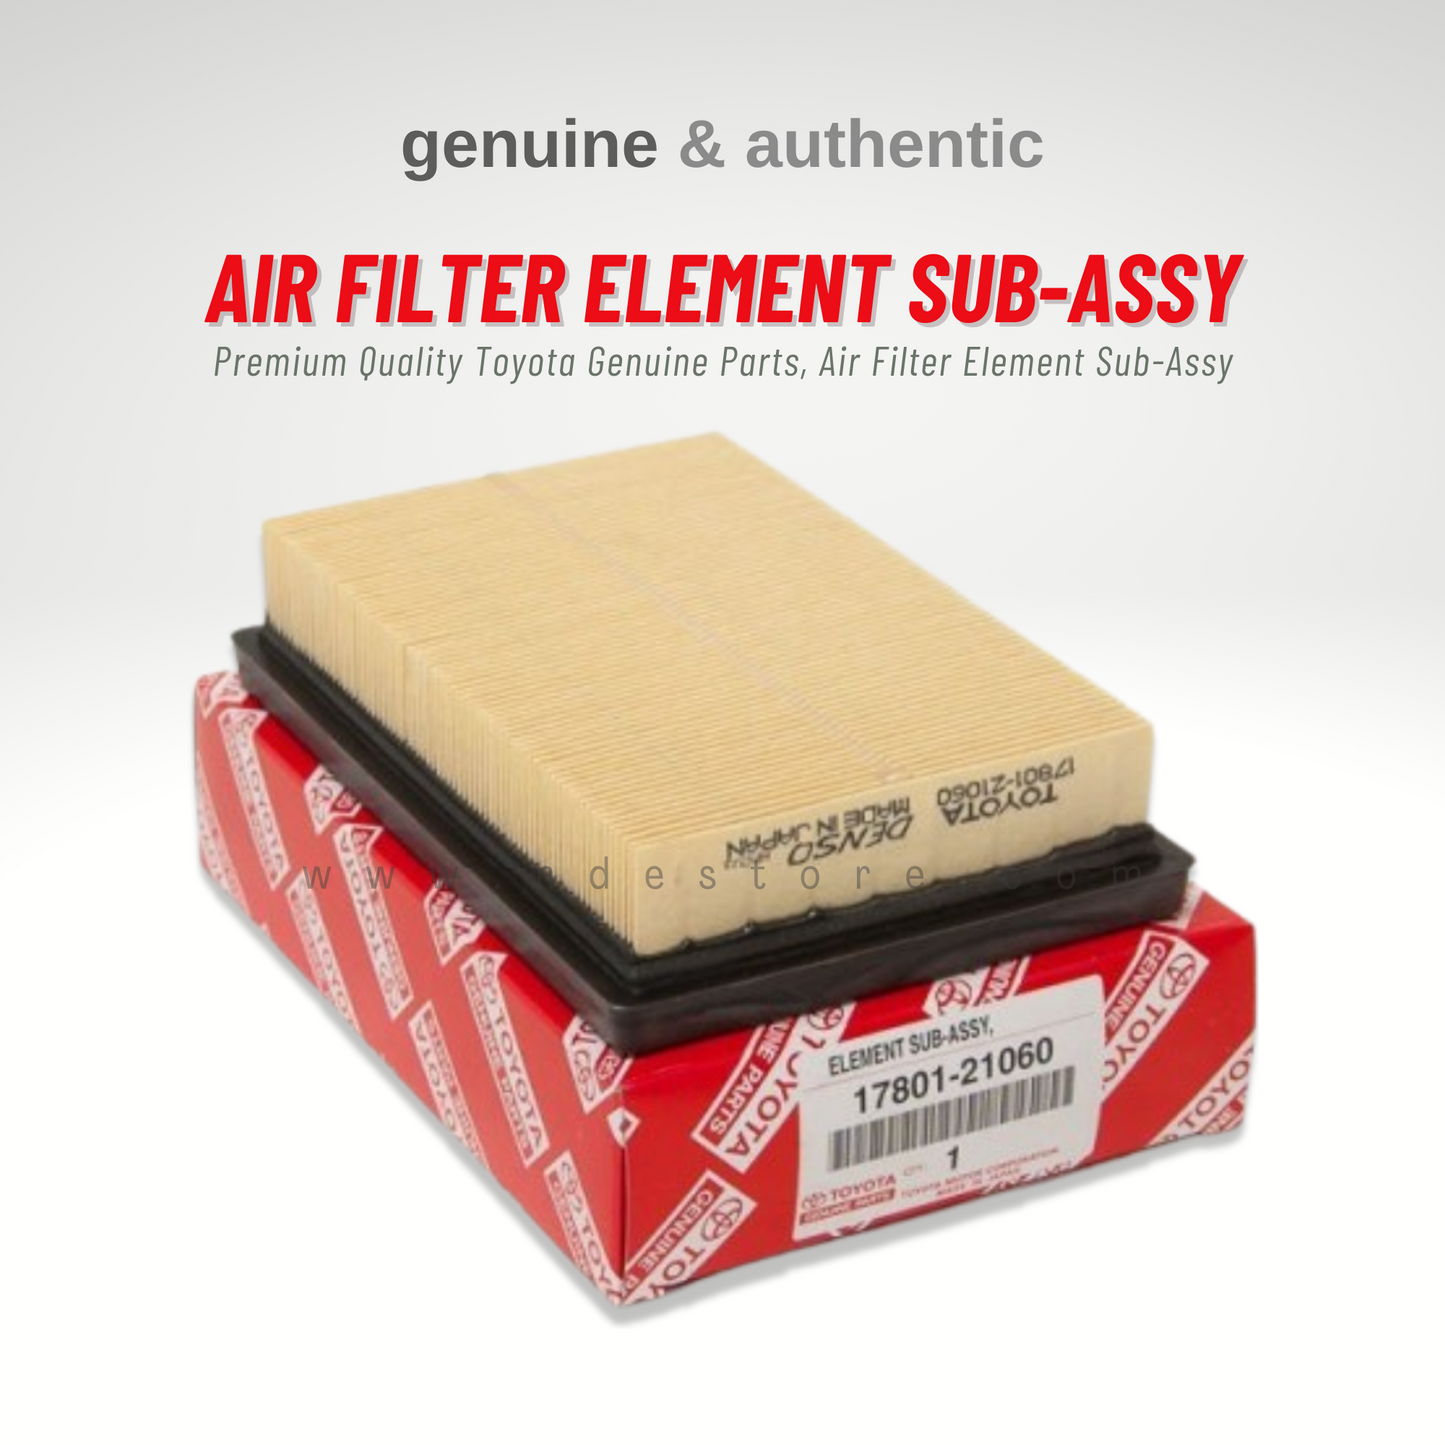 AIR FILTER ELEMENT SUB ASSY GENUINE 1000CC FOR TOYOTA VITZ (2014-ONWARD)